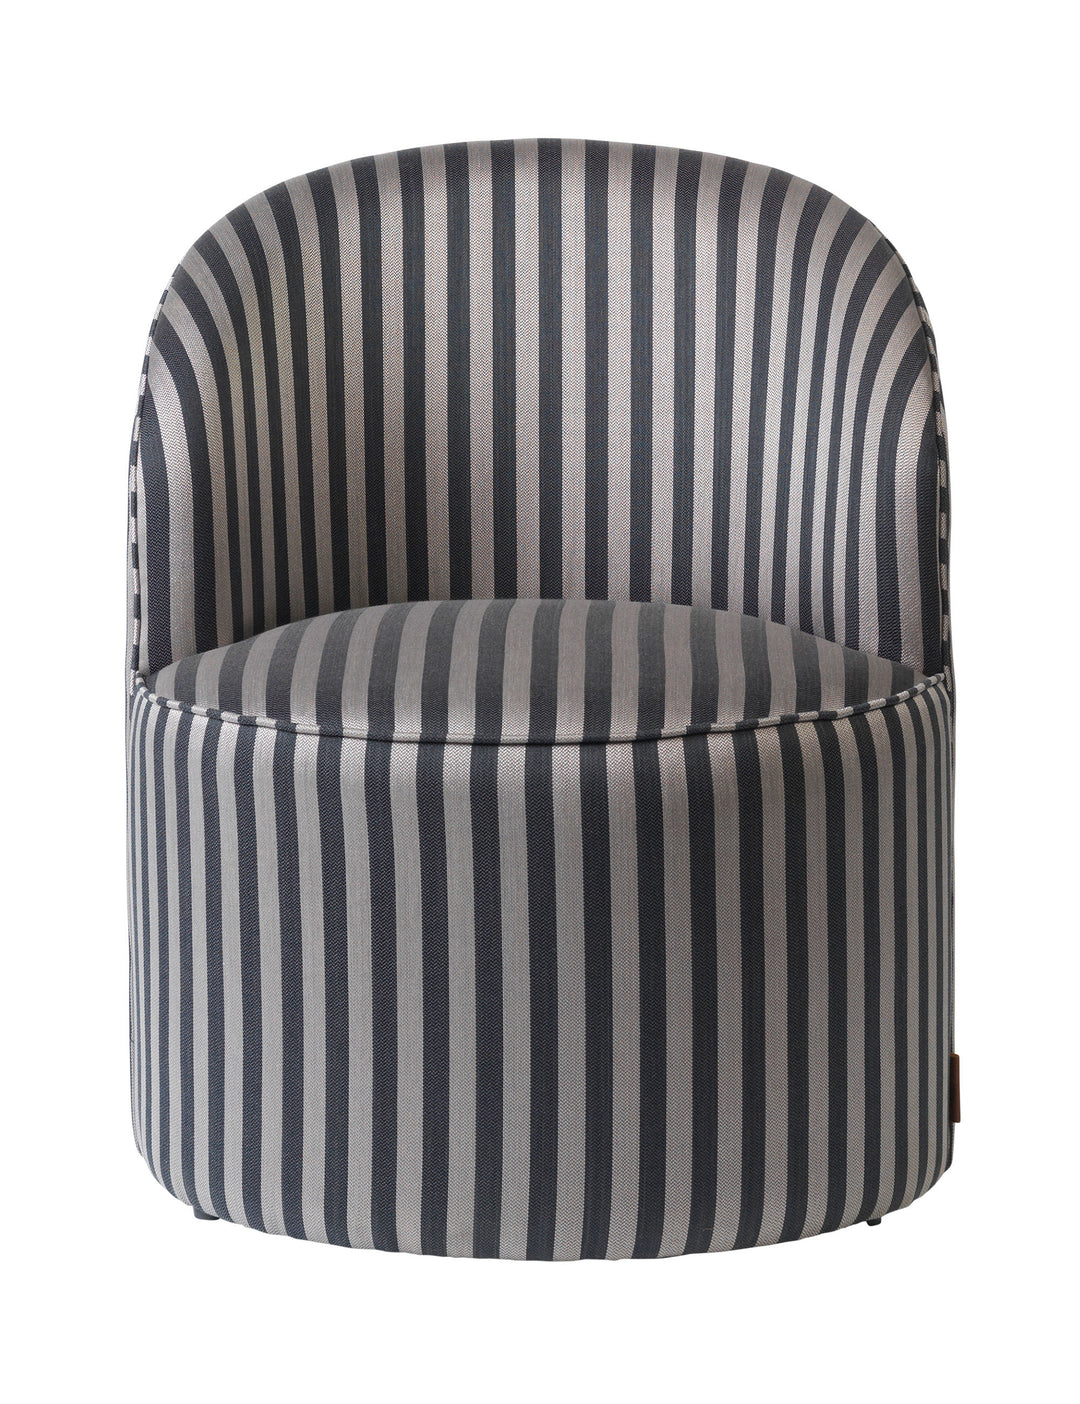 Cozy Living Effie Chair - STRIPED GREY